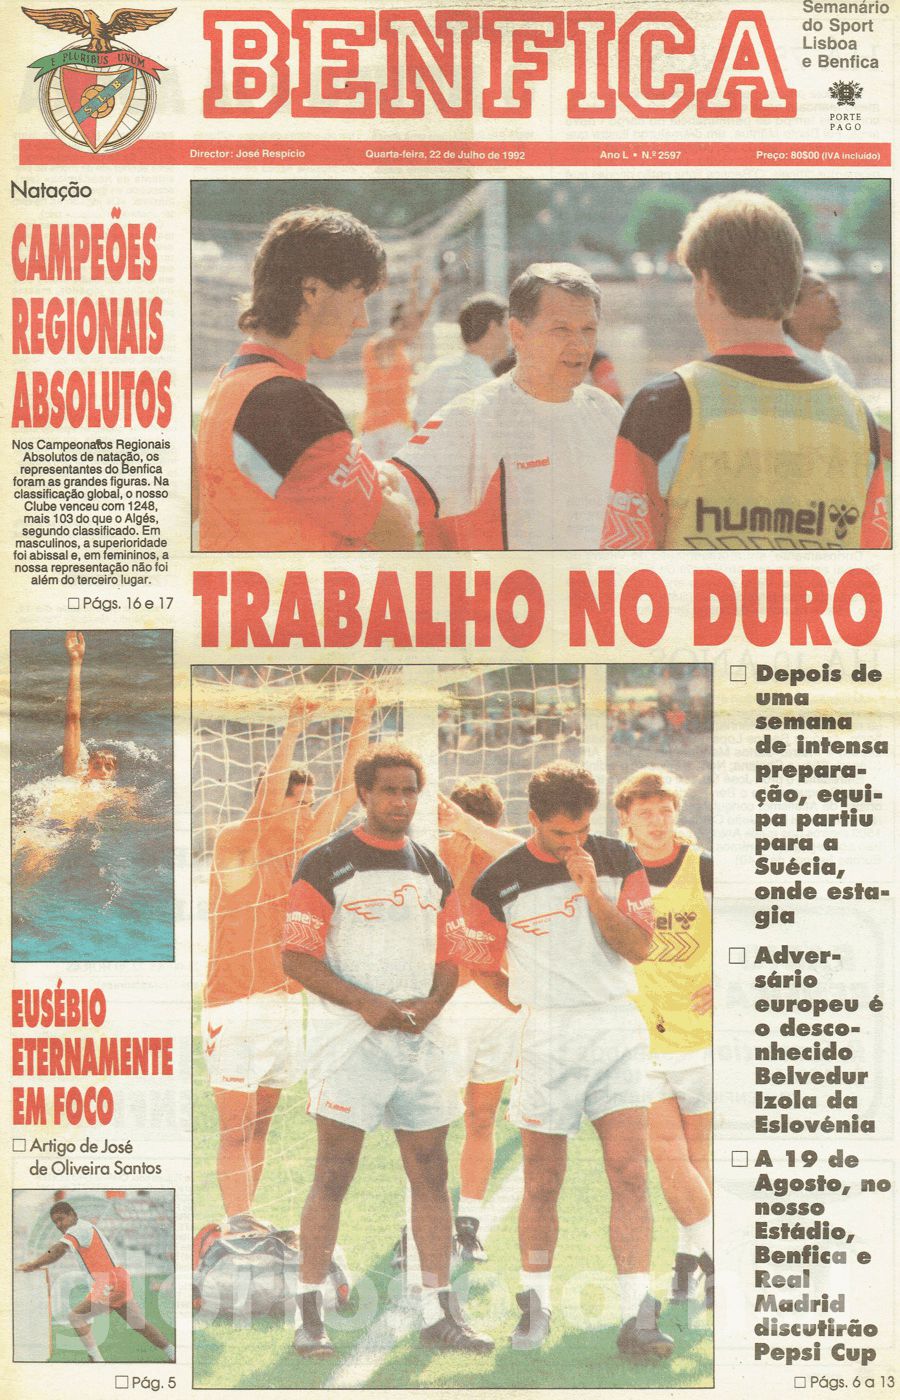 jornal o benfica 2597 1992-07-22